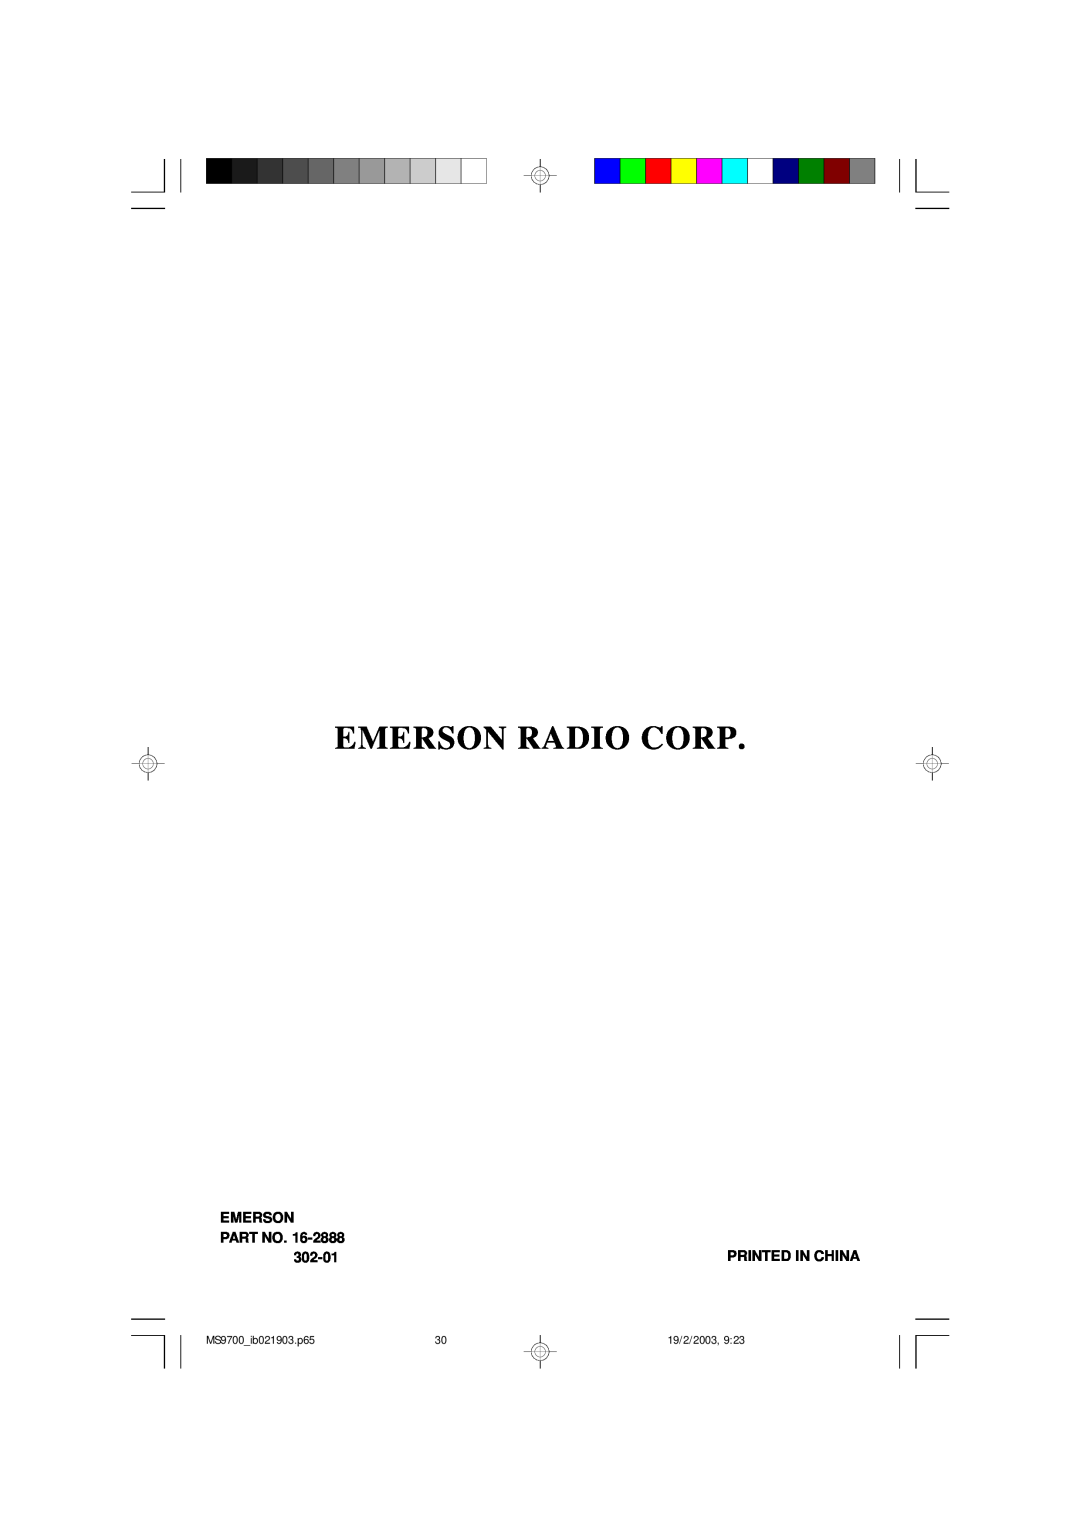 Emerson owner manual Emerson Radio Corp, 302-01, MS9700 ib021903.p65, 19/2/2003, 9 